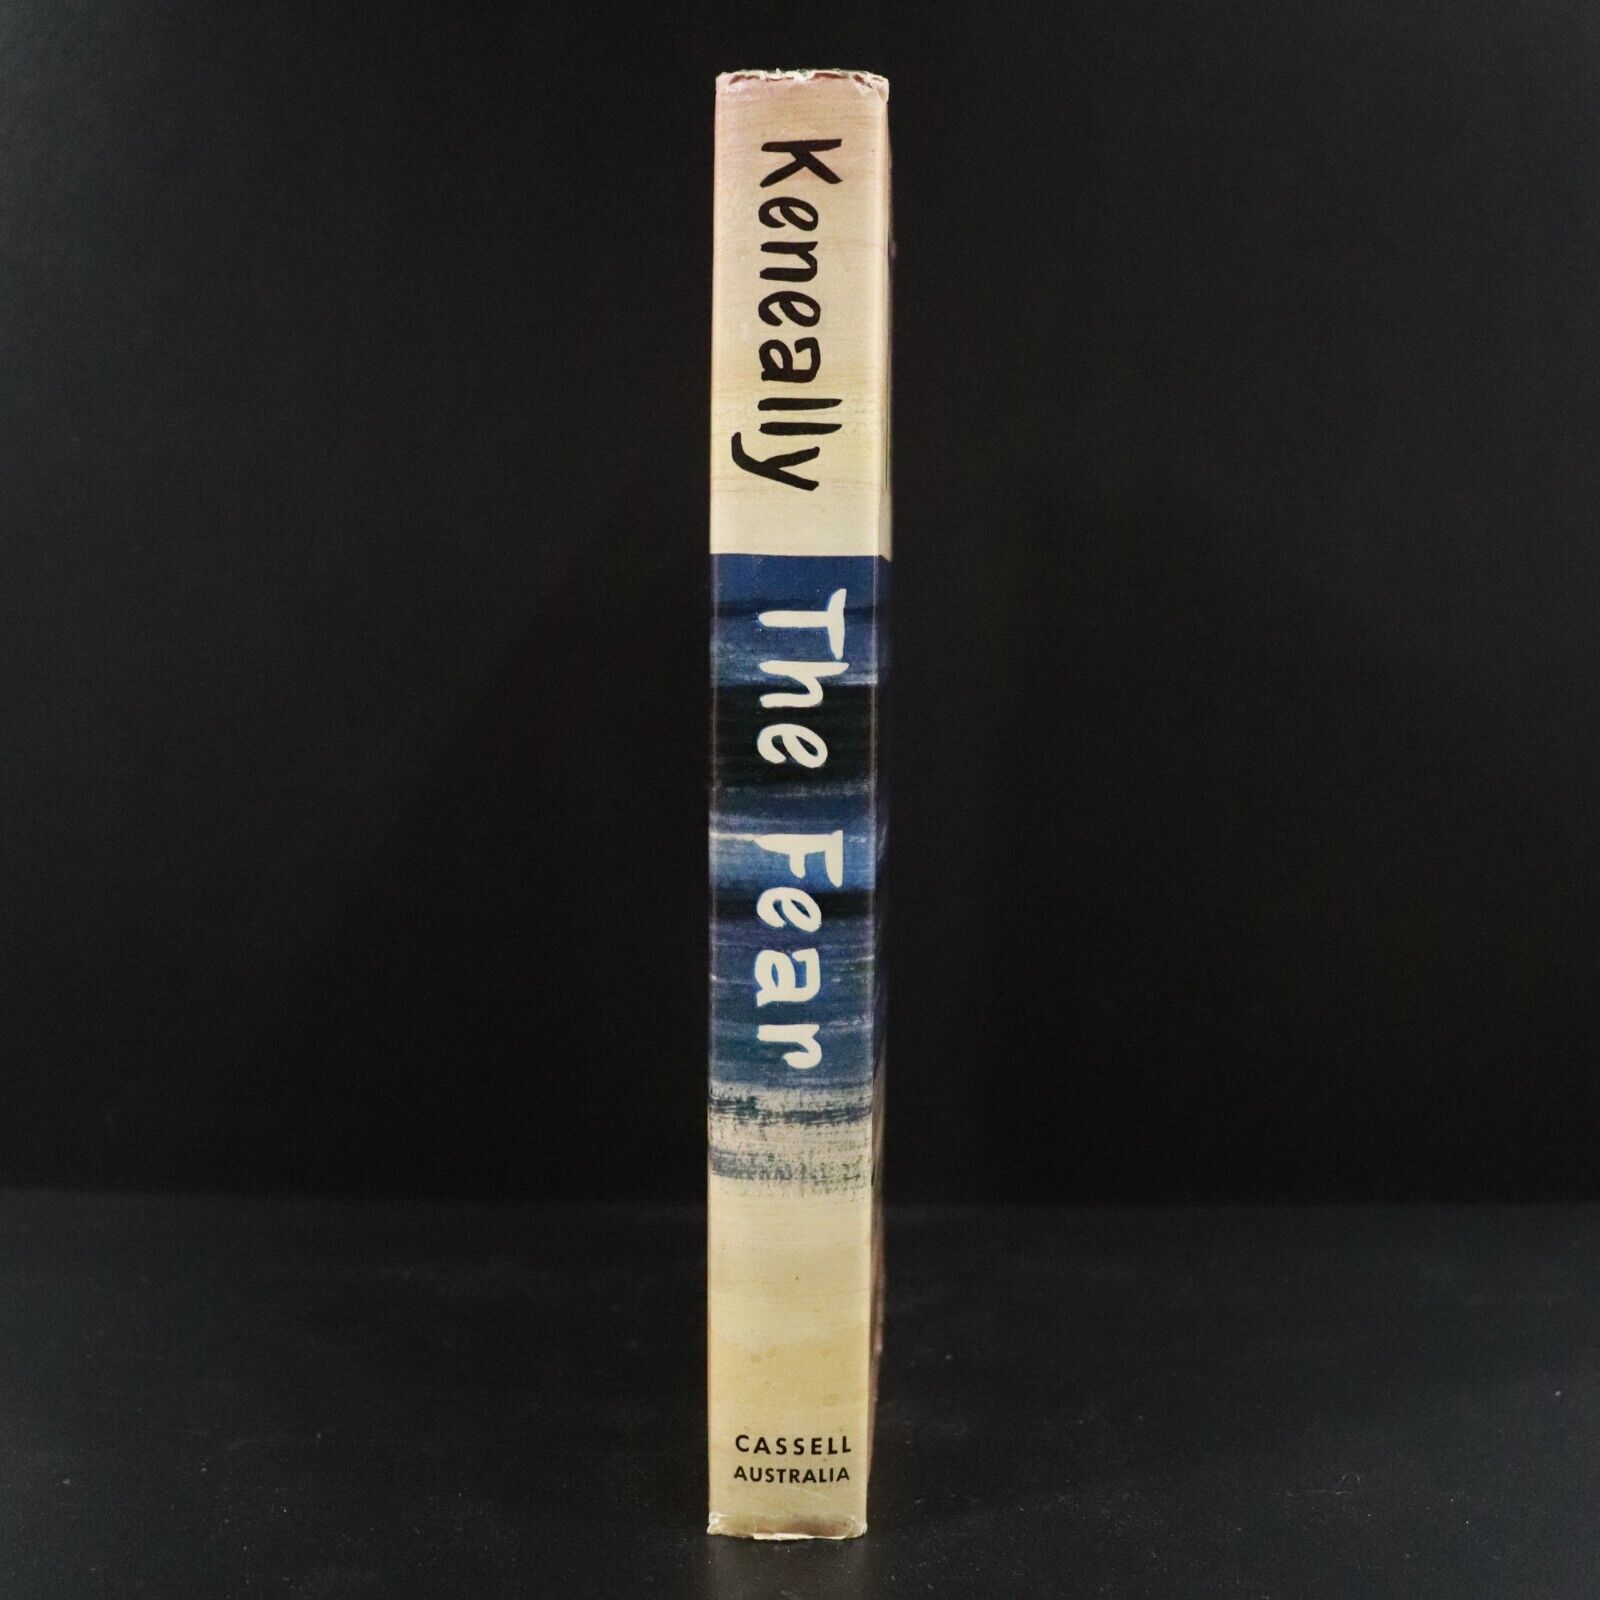 1965 The Fear by Thomas Keneally 1st Edition Australian Fiction Book